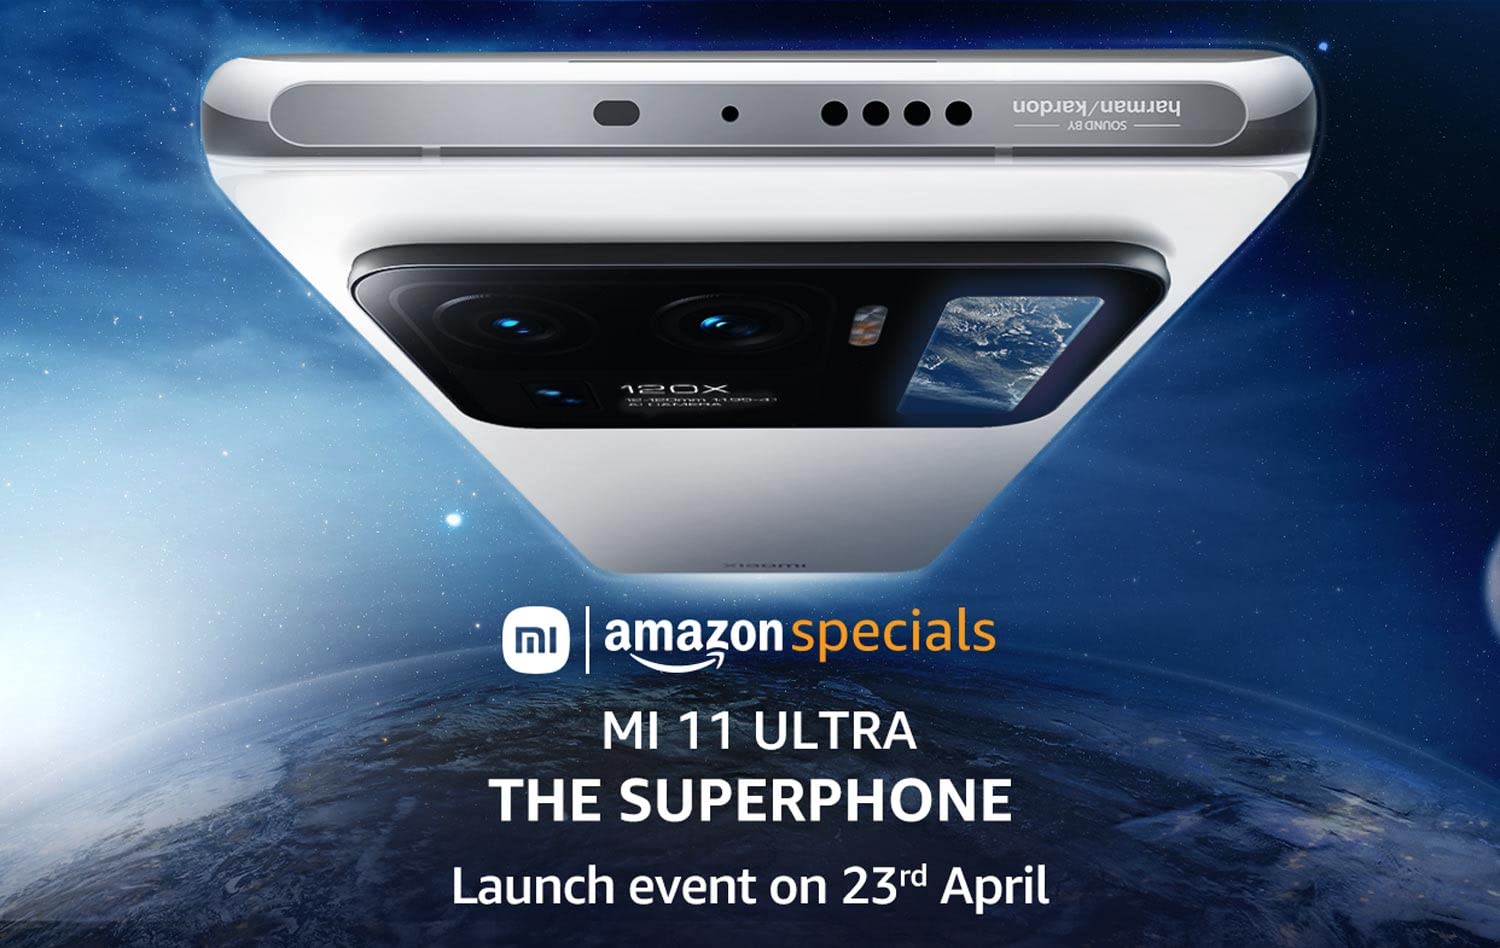 Xiaomi Mi 11 Ultra will be available through Amazon India